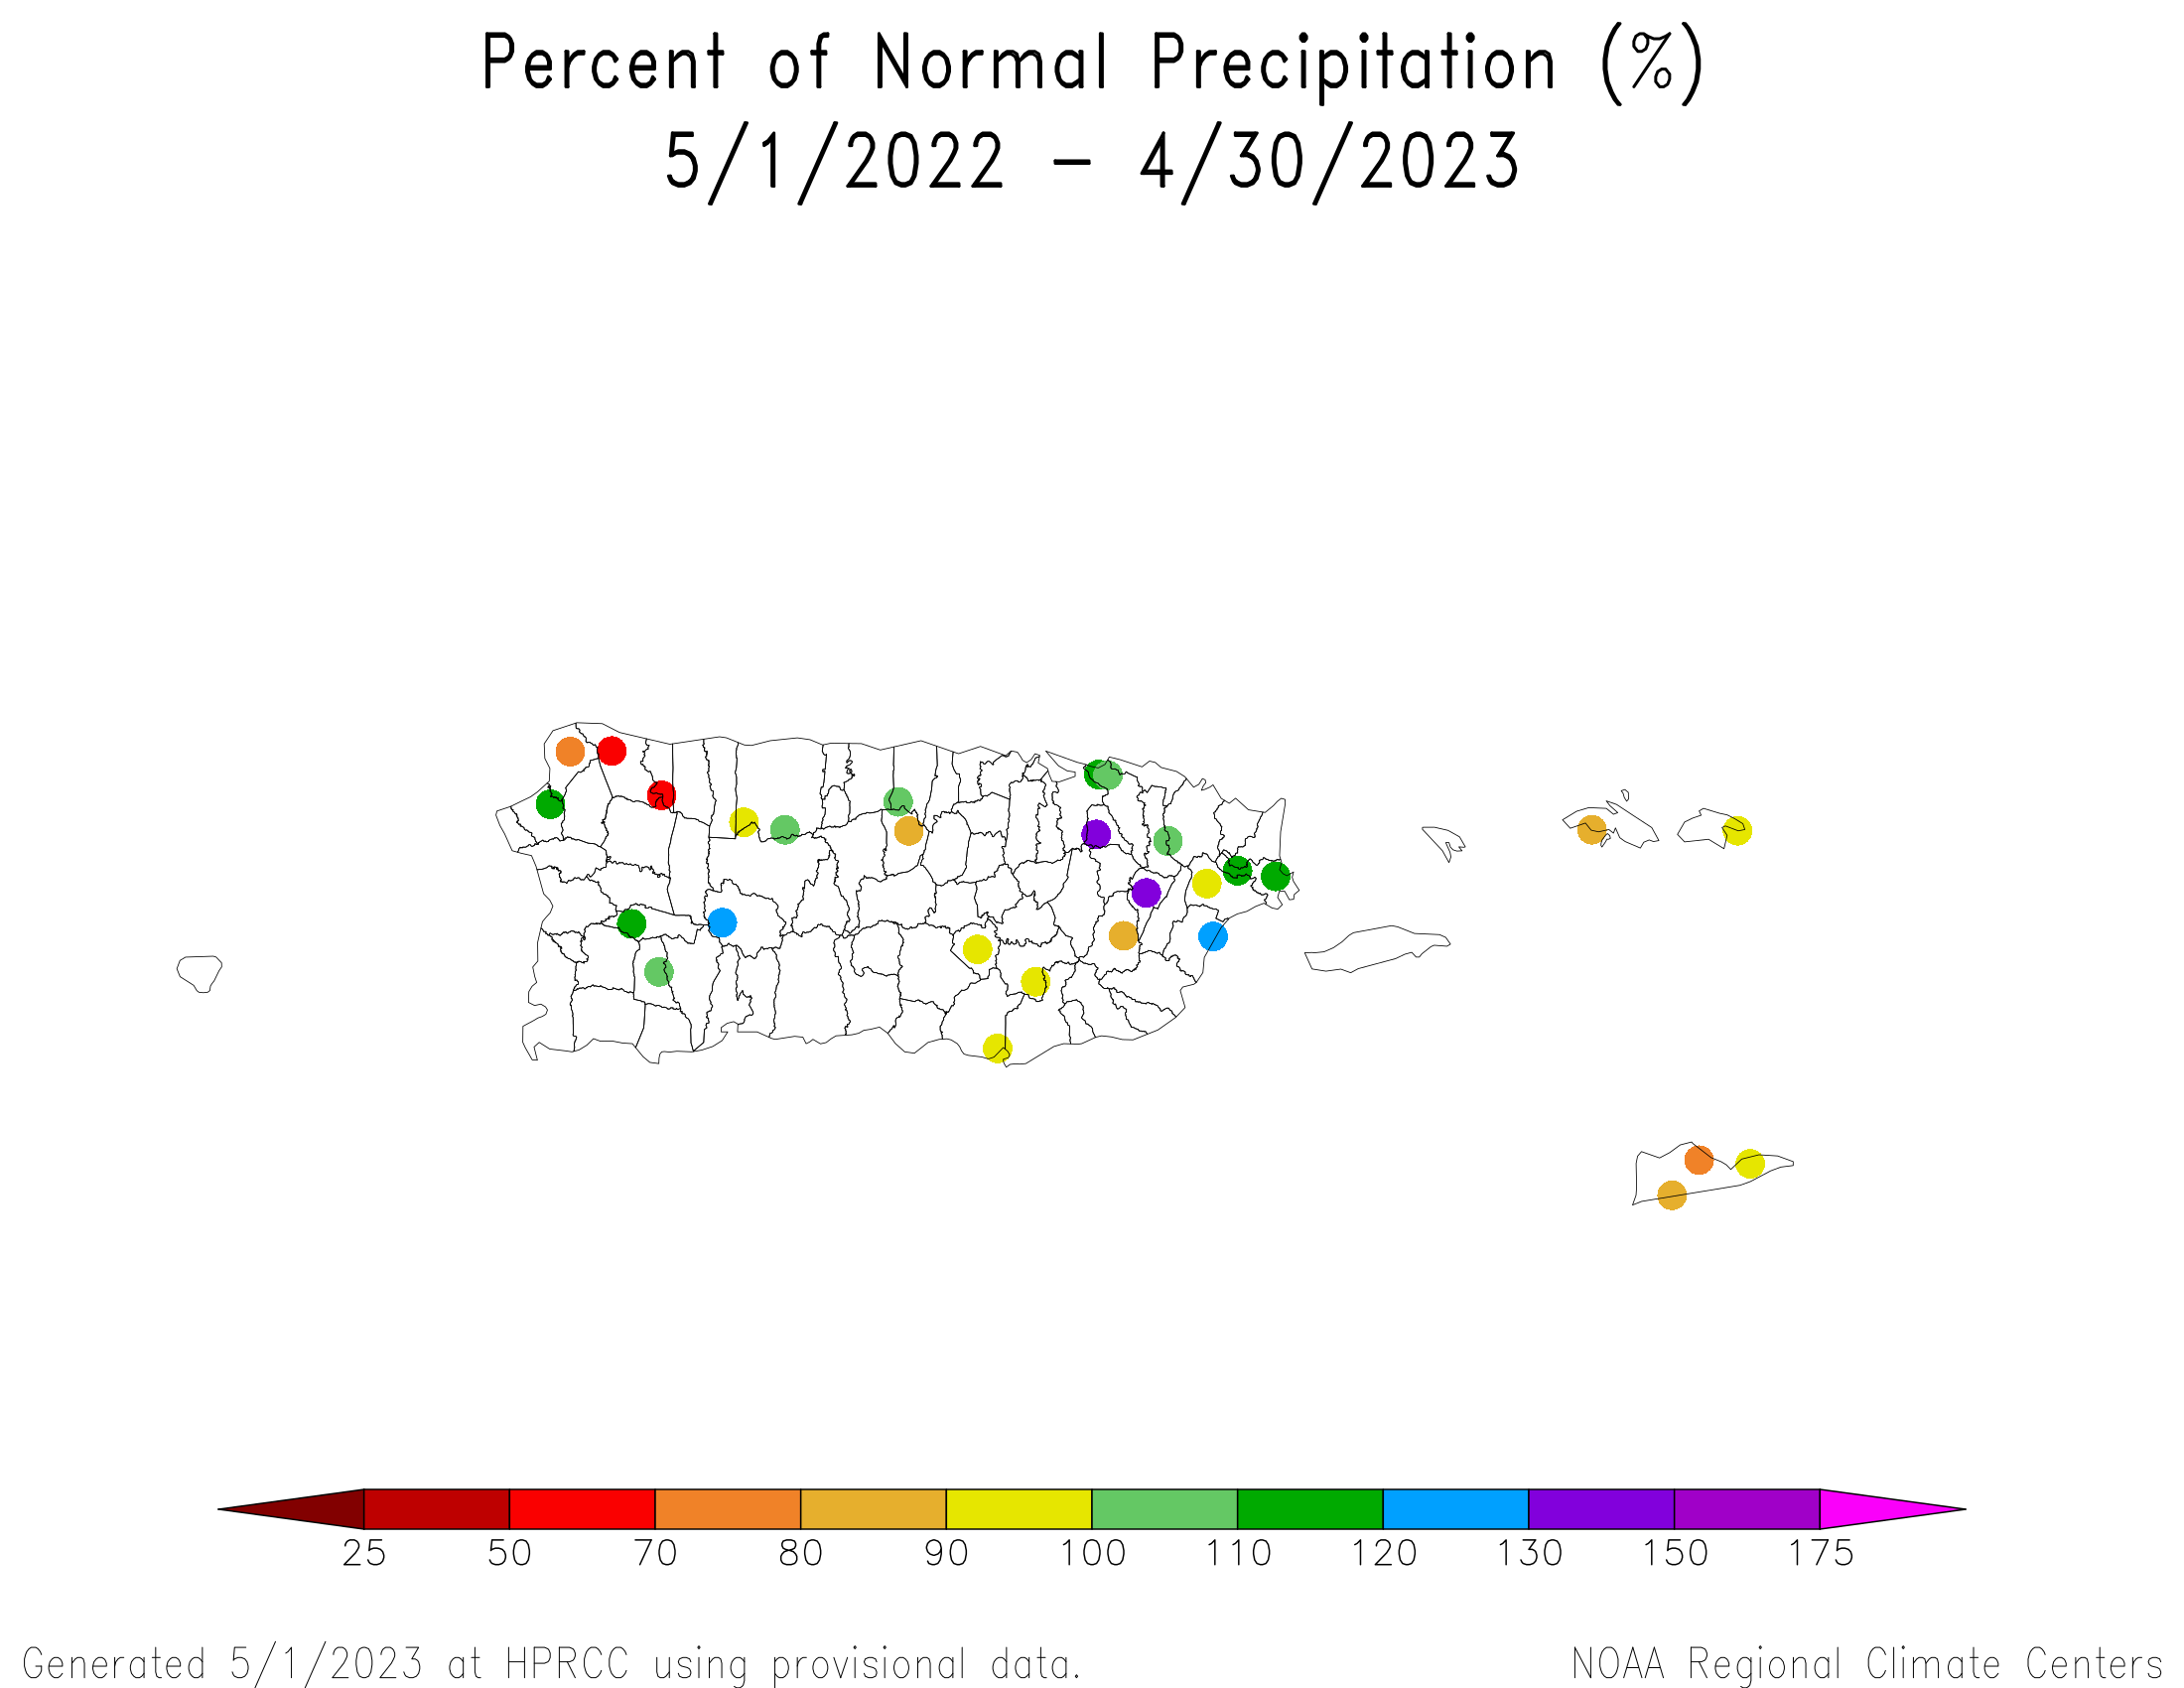 Puerto Rico and US Virgin Islands Percent of Normal Precipitation, May 2022-April 2023